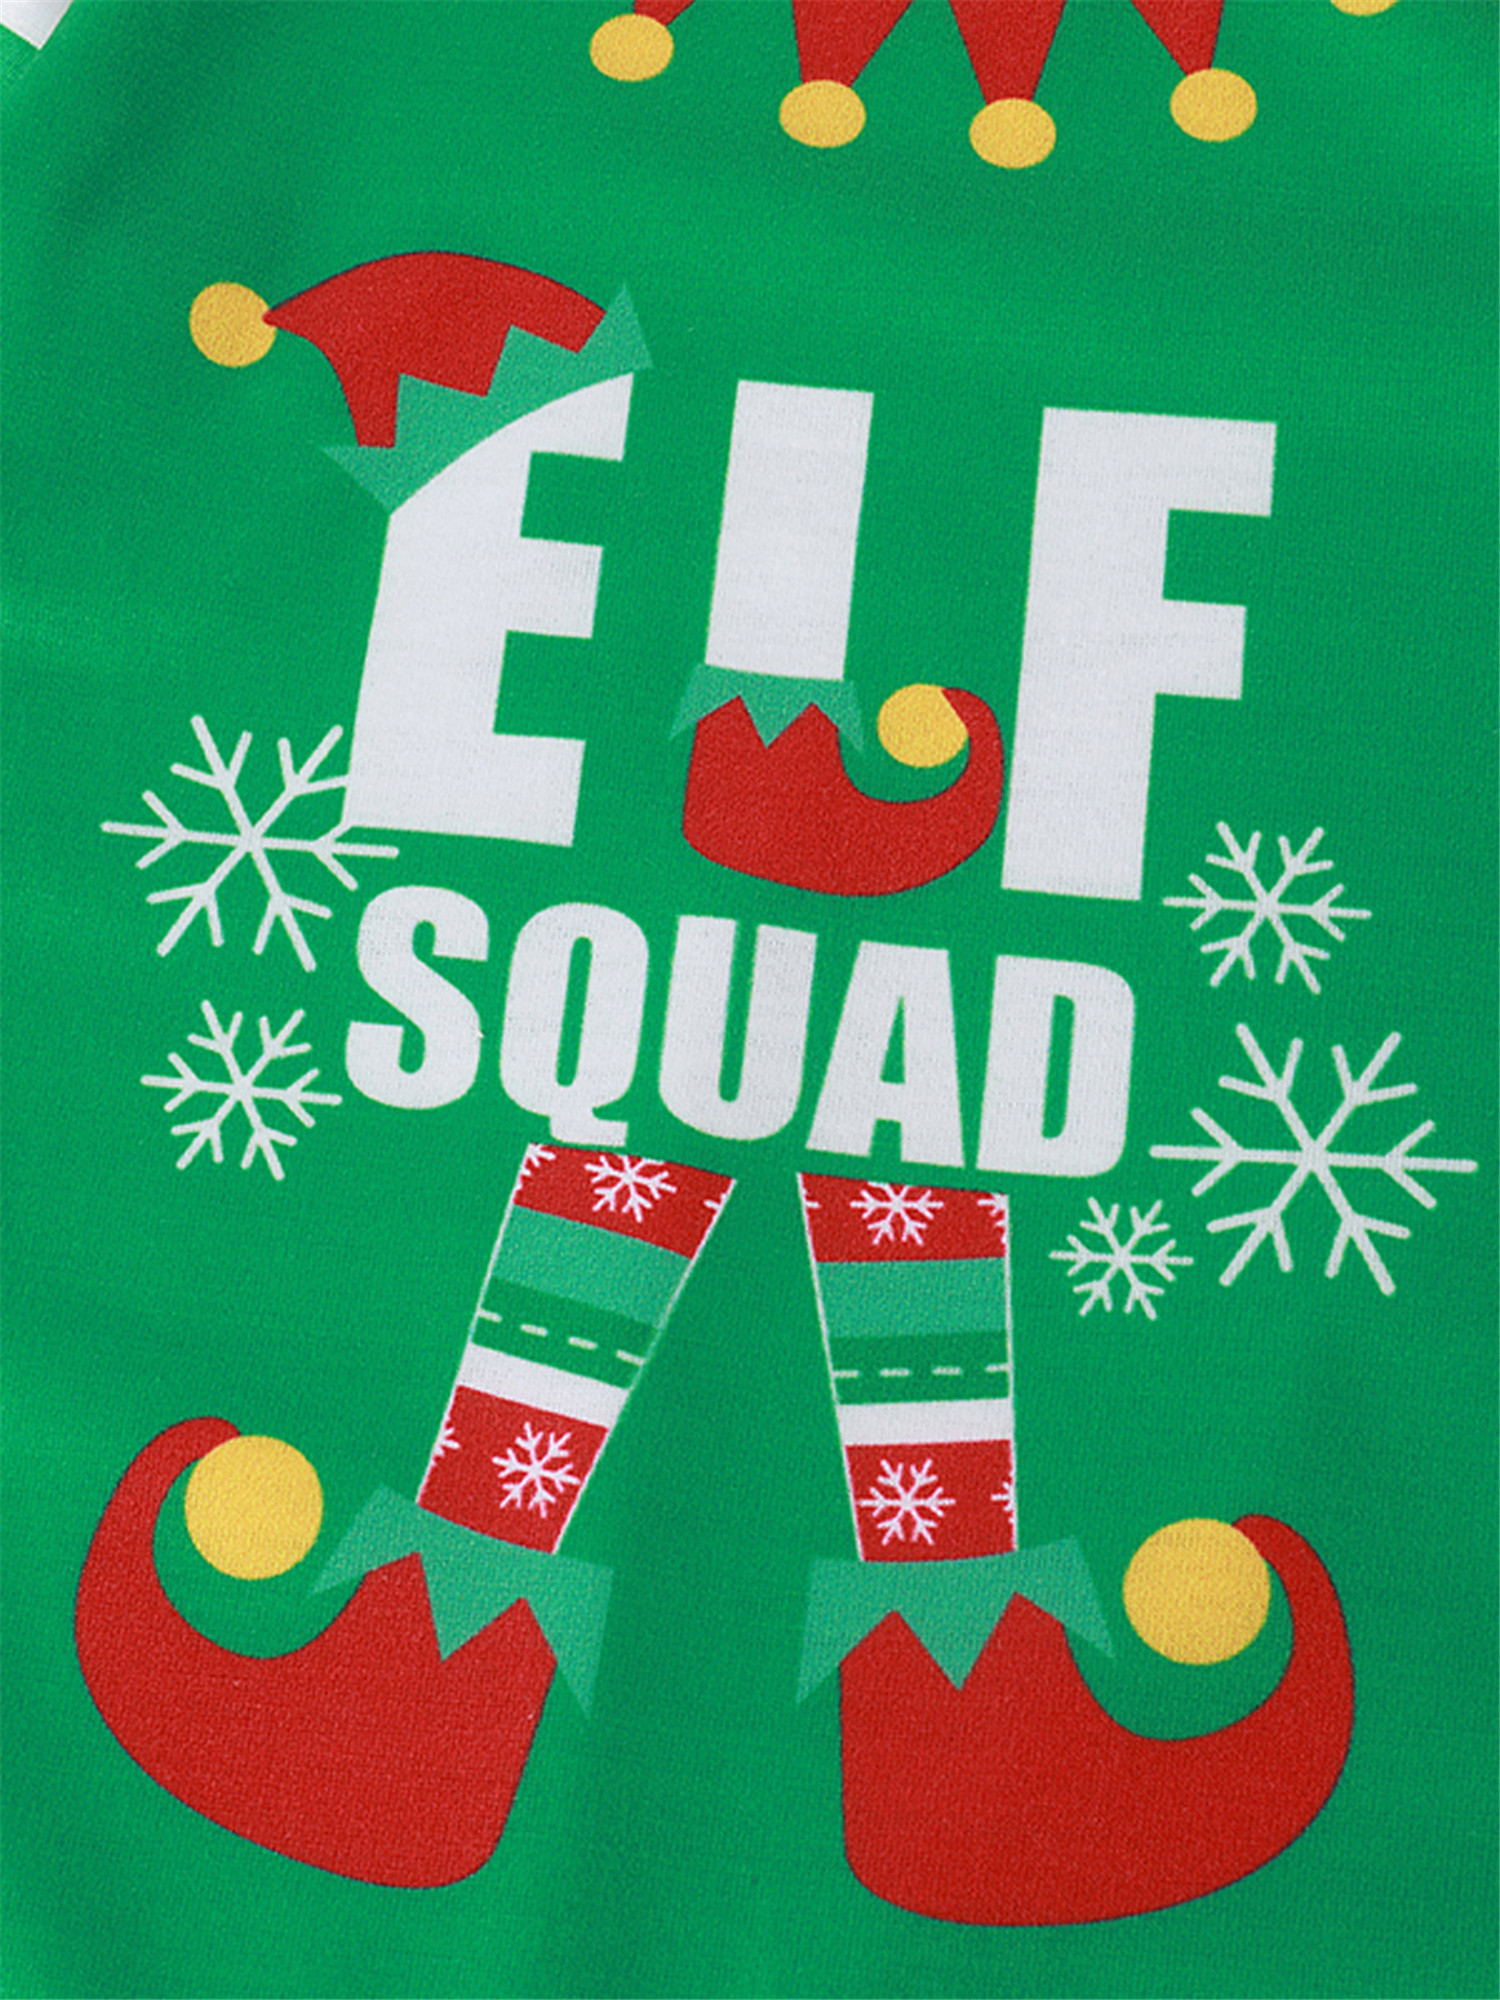 Aunavey Matching Family Christmas Pajamas Sets Holiday PJ's with ELF Printing Loungewear Sleepwear - image 3 of 6